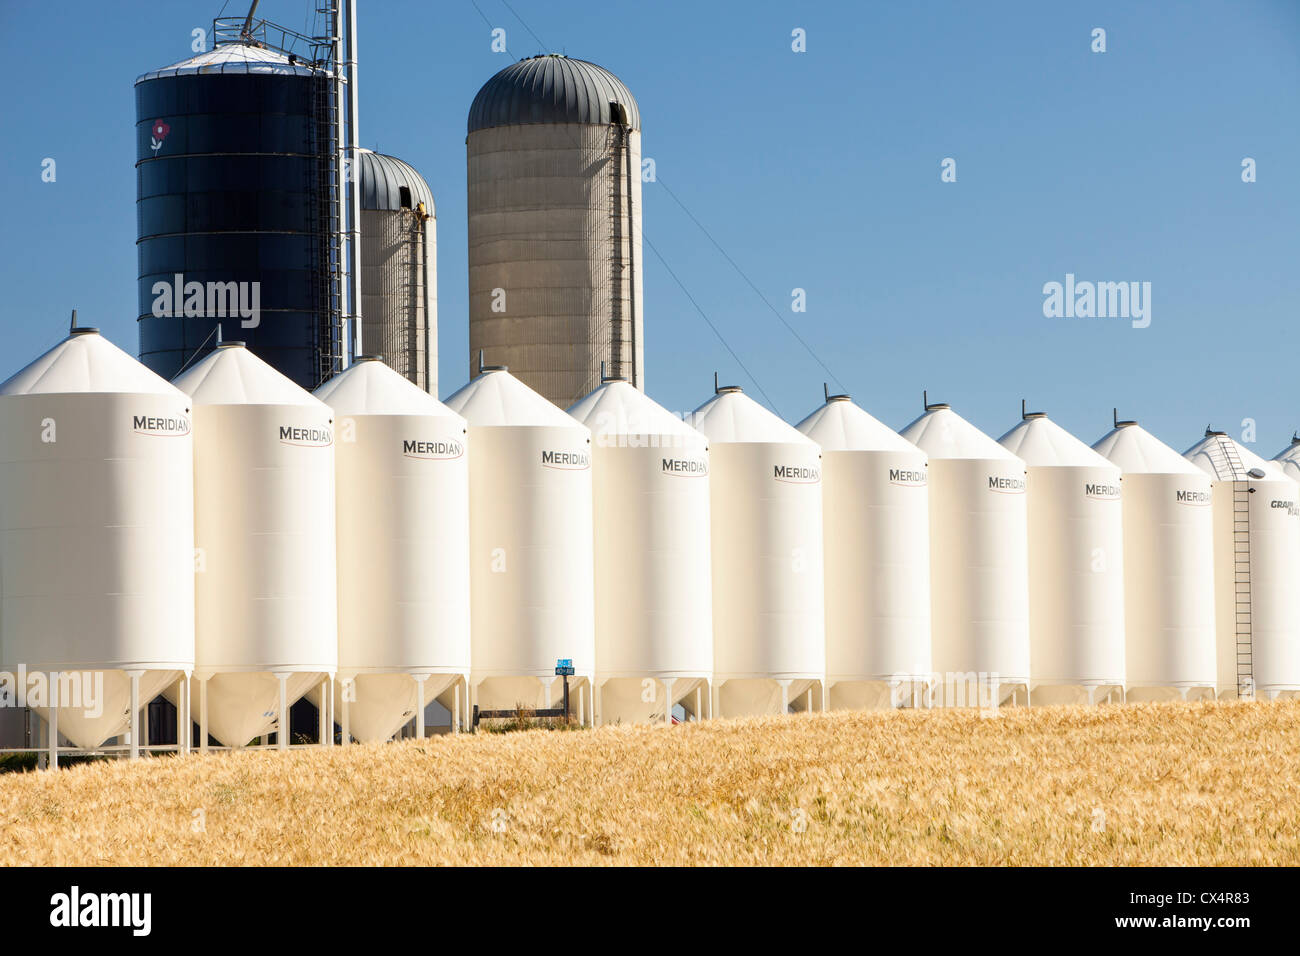 A field of Wheat in Alberta, Canada, with grain silos. Stock Photo